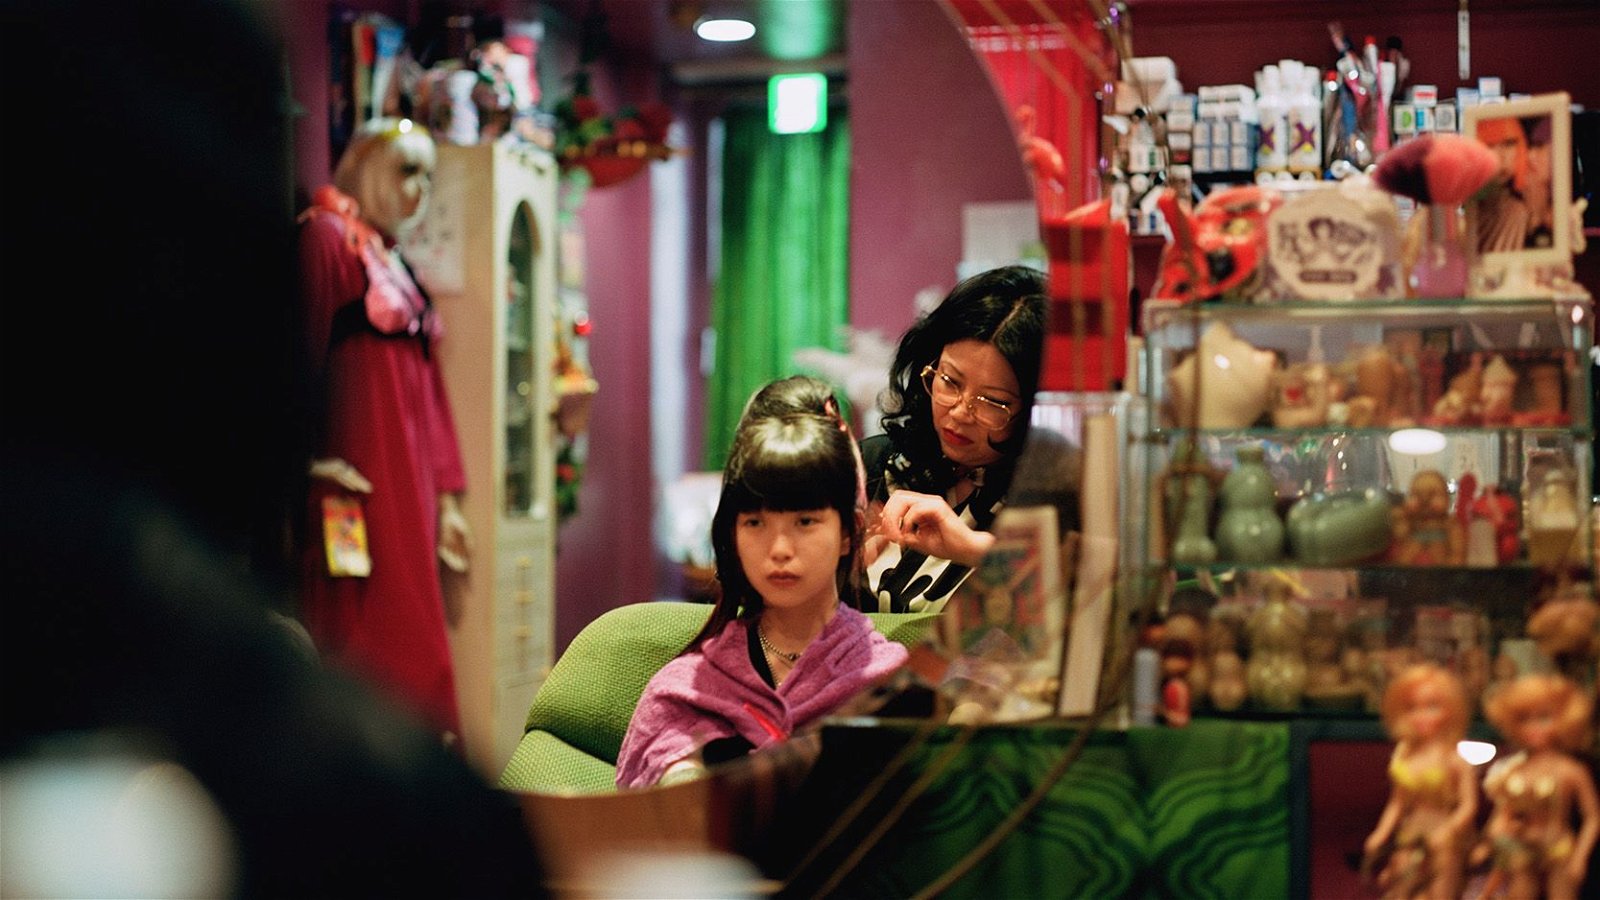 Customer and hairdresser in Japanese hair salon